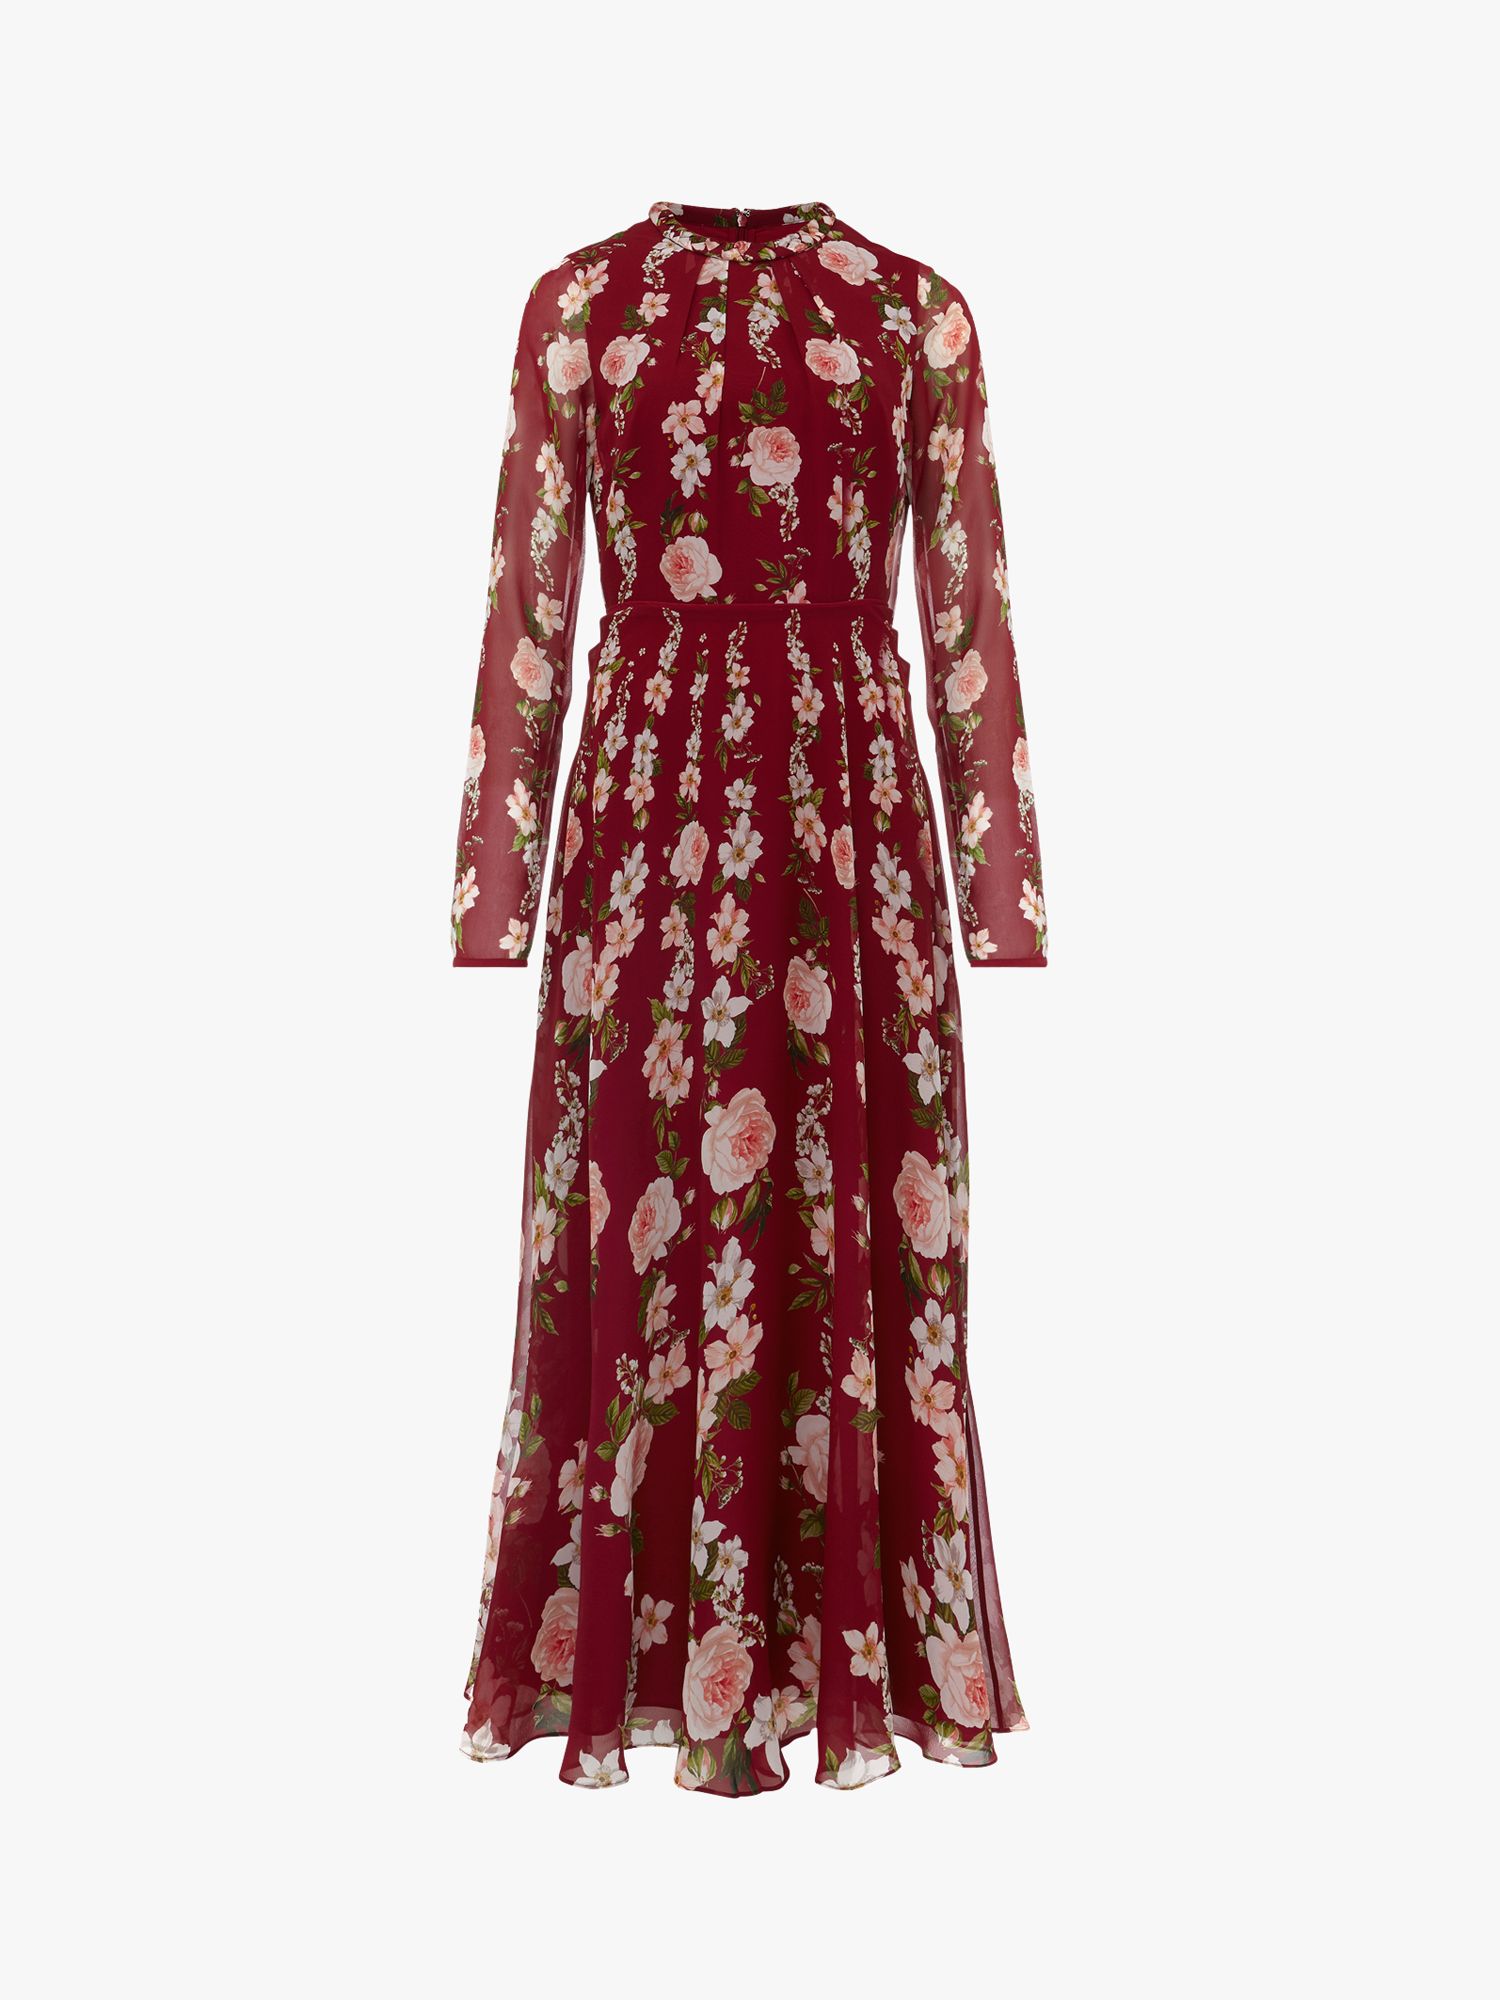 Hobbs Rosabelle Floral Dress, Burgundy at John Lewis & Partners